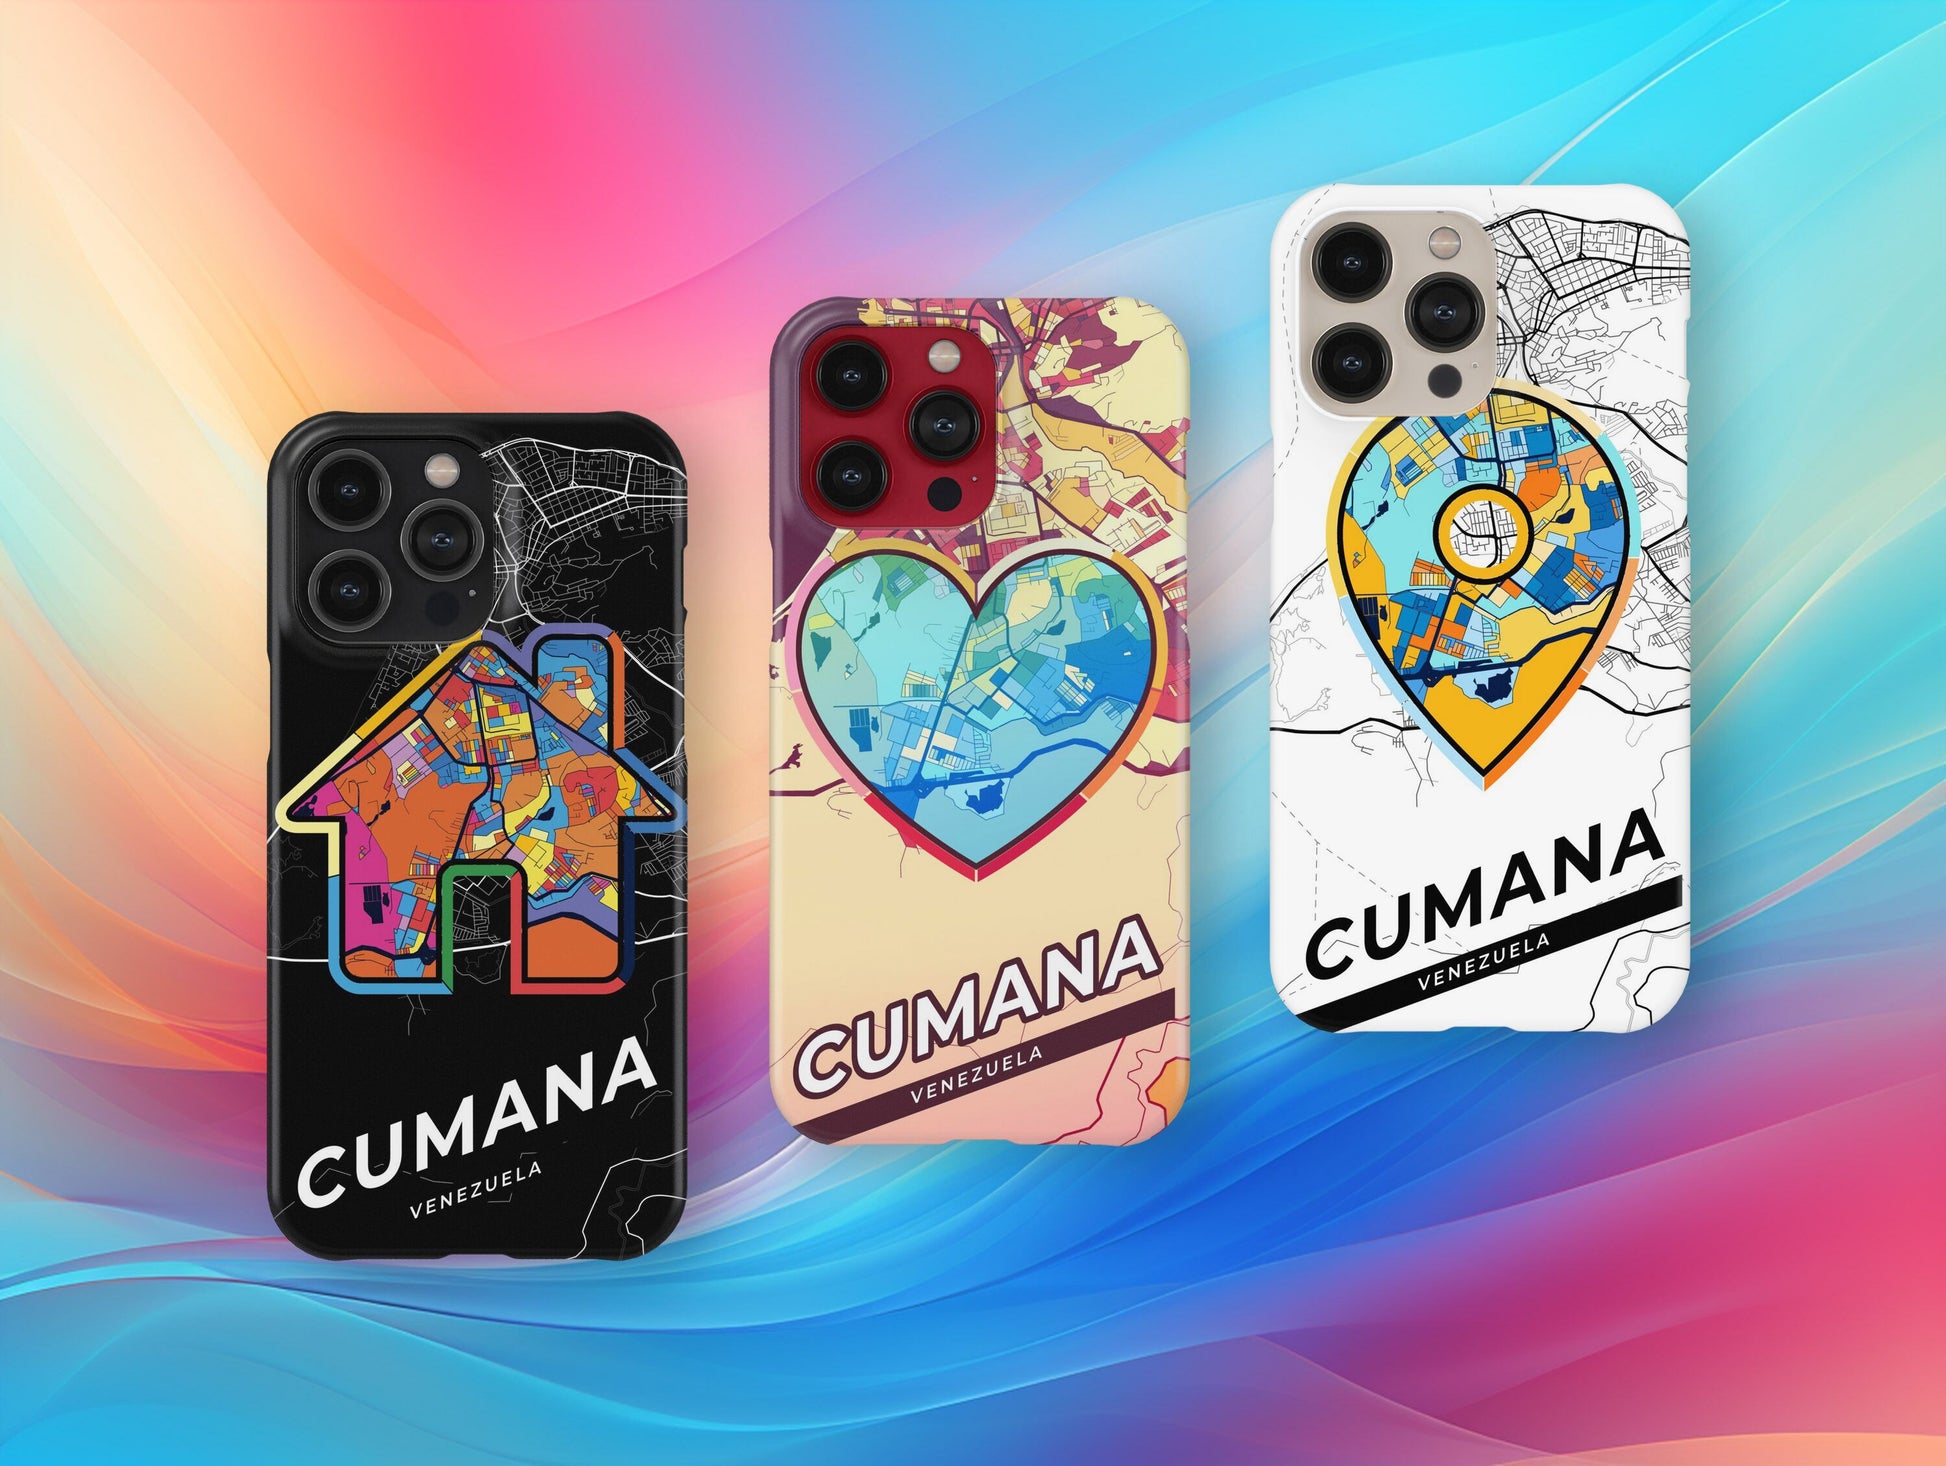 Cumana Venezuela slim phone case with colorful icon. Birthday, wedding or housewarming gift. Couple match cases.